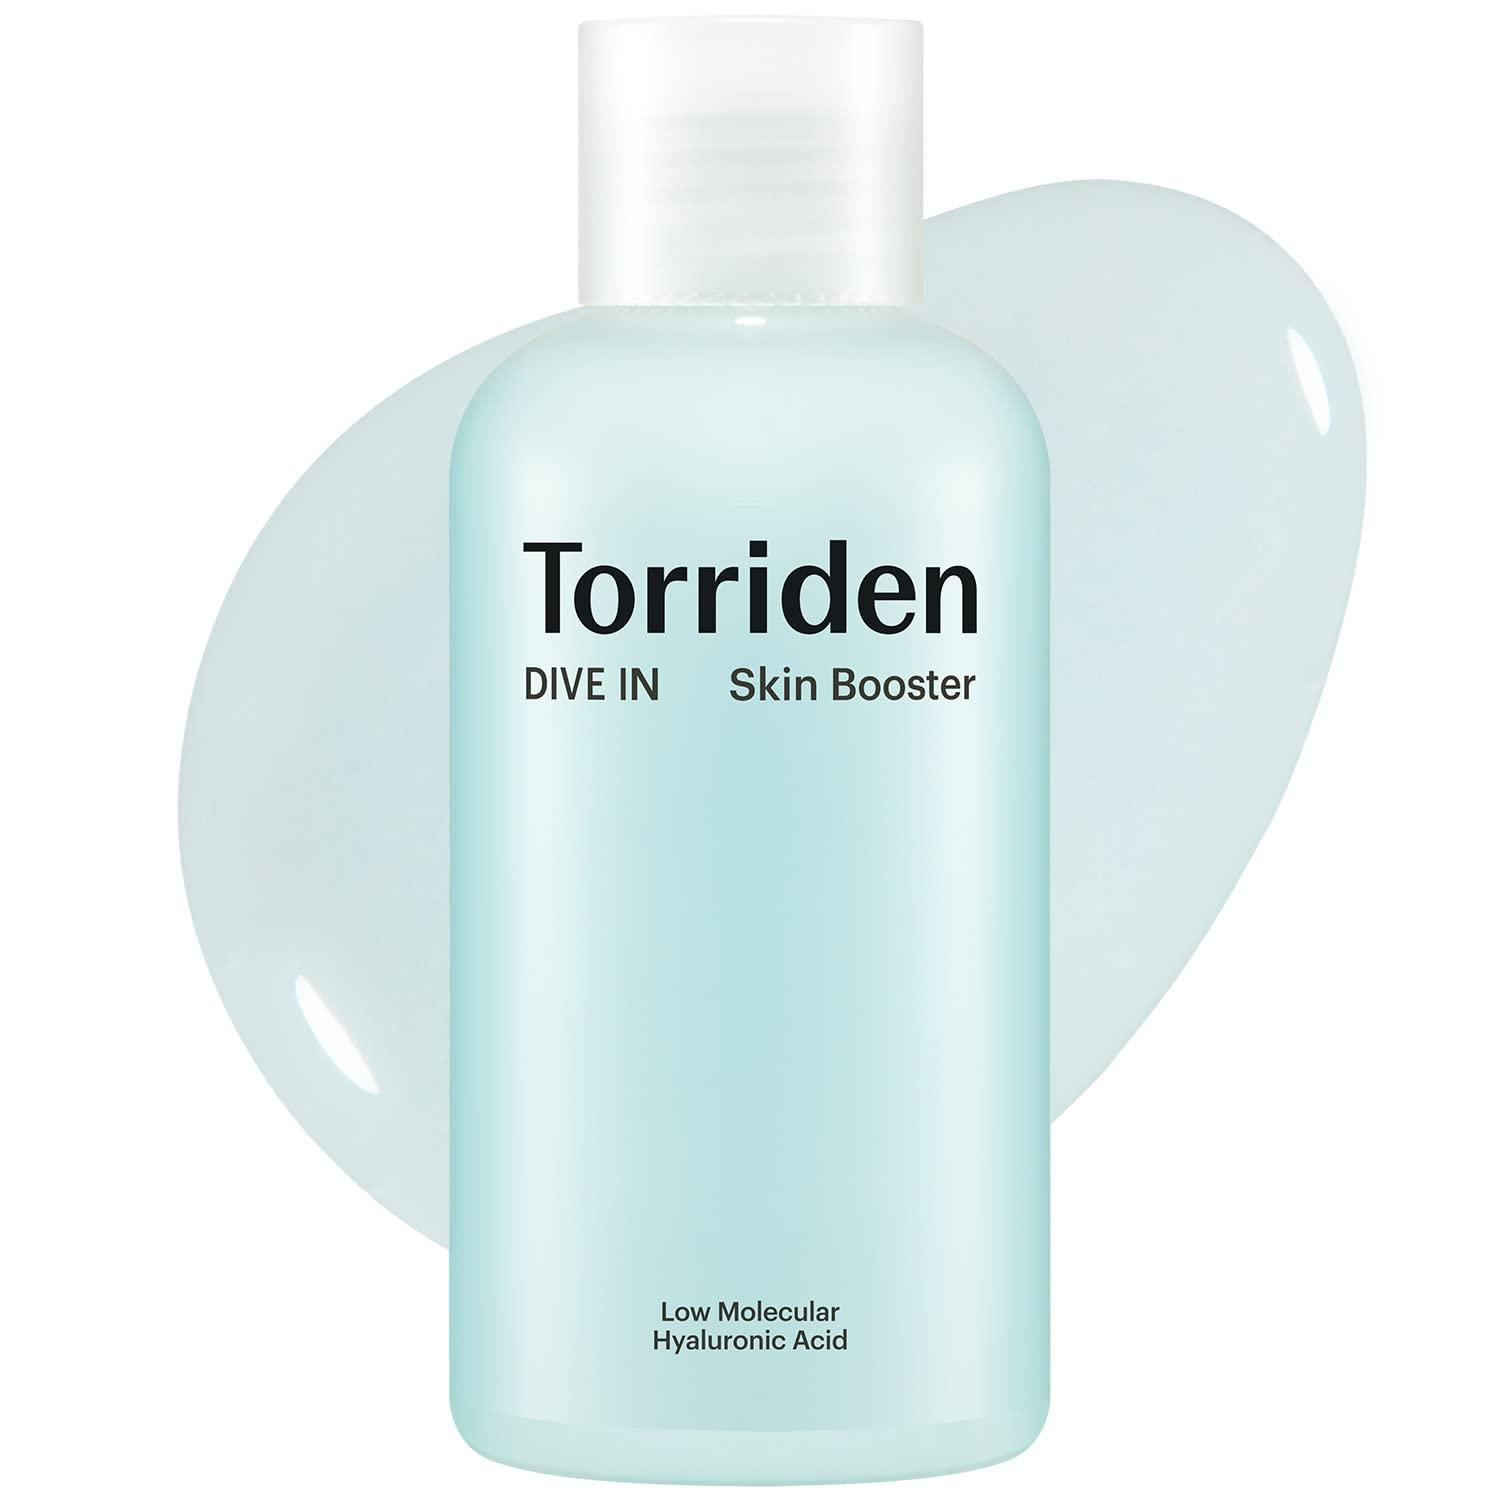 Torriden Dive-In Low Molecule Hyaluronic Acid Skin Booster